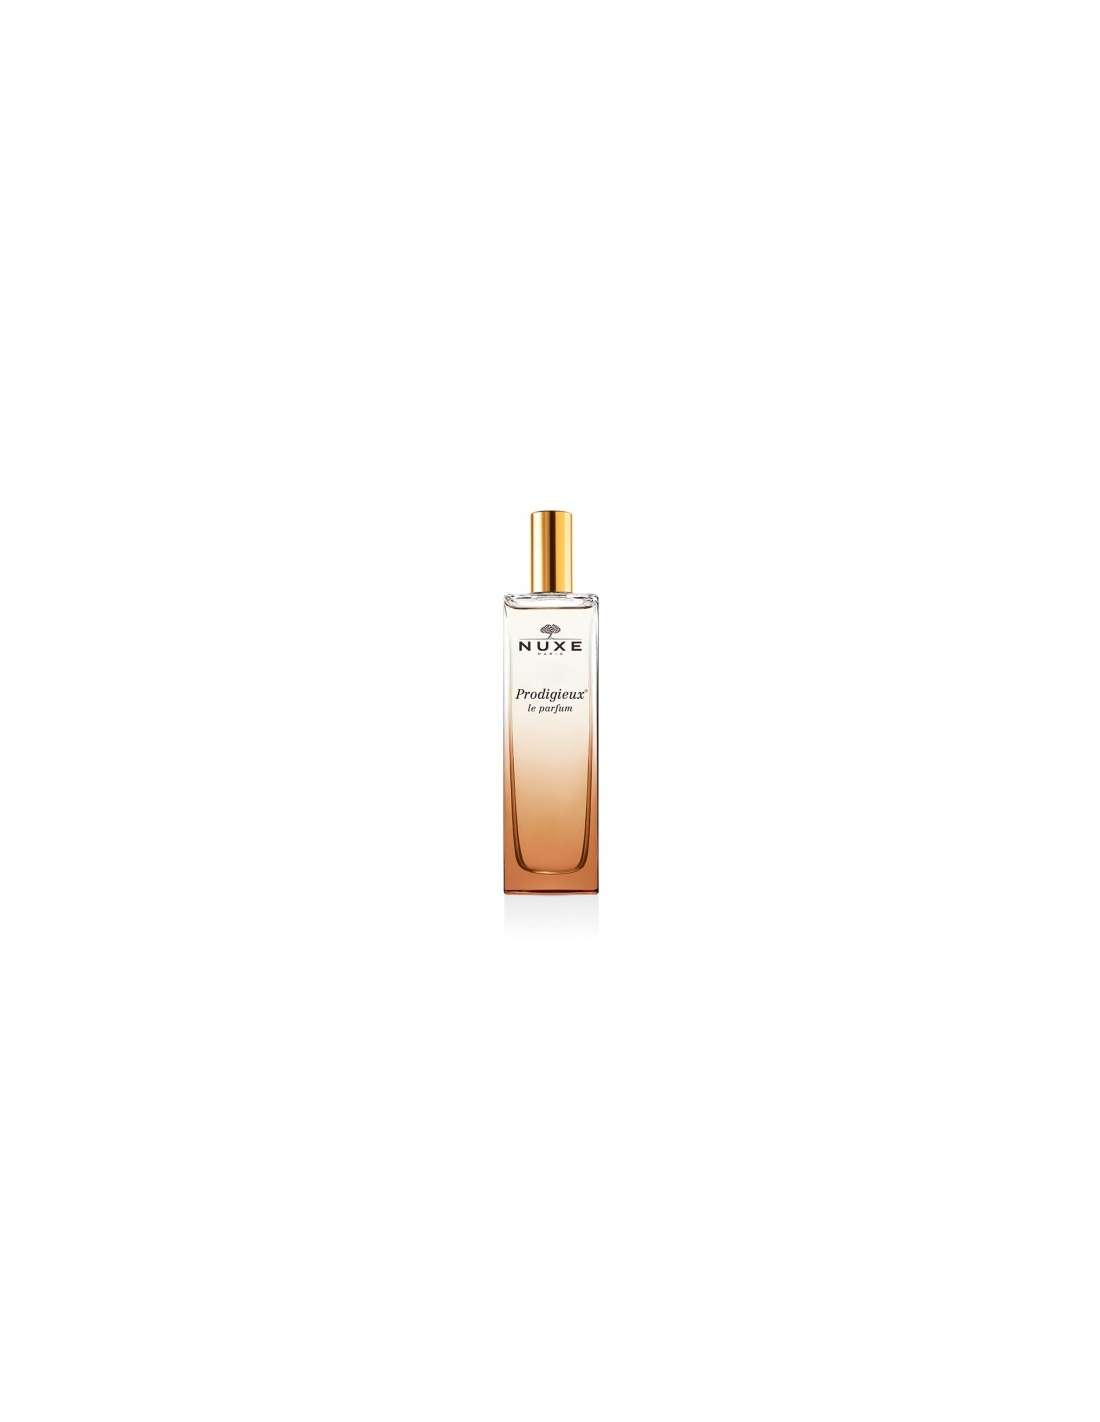 Va - Orange Perfume of Prodigious & 30ml Nuxe Magnolia Notes Blossom,